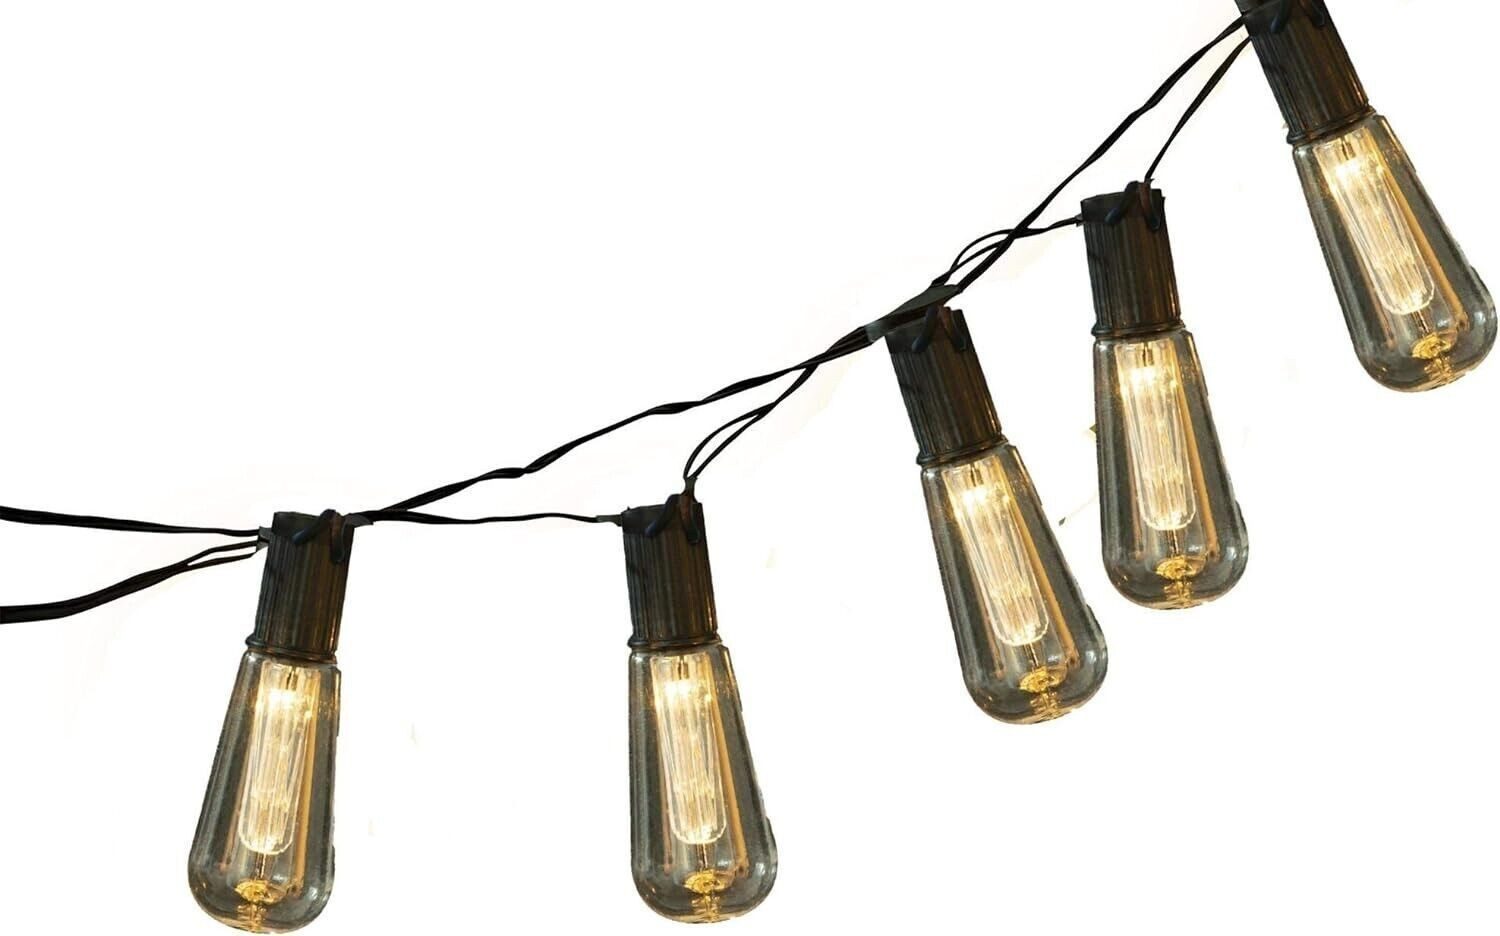 ezsolar LED-Lichterkette warmweiße LED 6m Länge, Campinglaterne, inkl. Befestigungsclip, Dämmerungssensor, 10 warmweiße LEDs